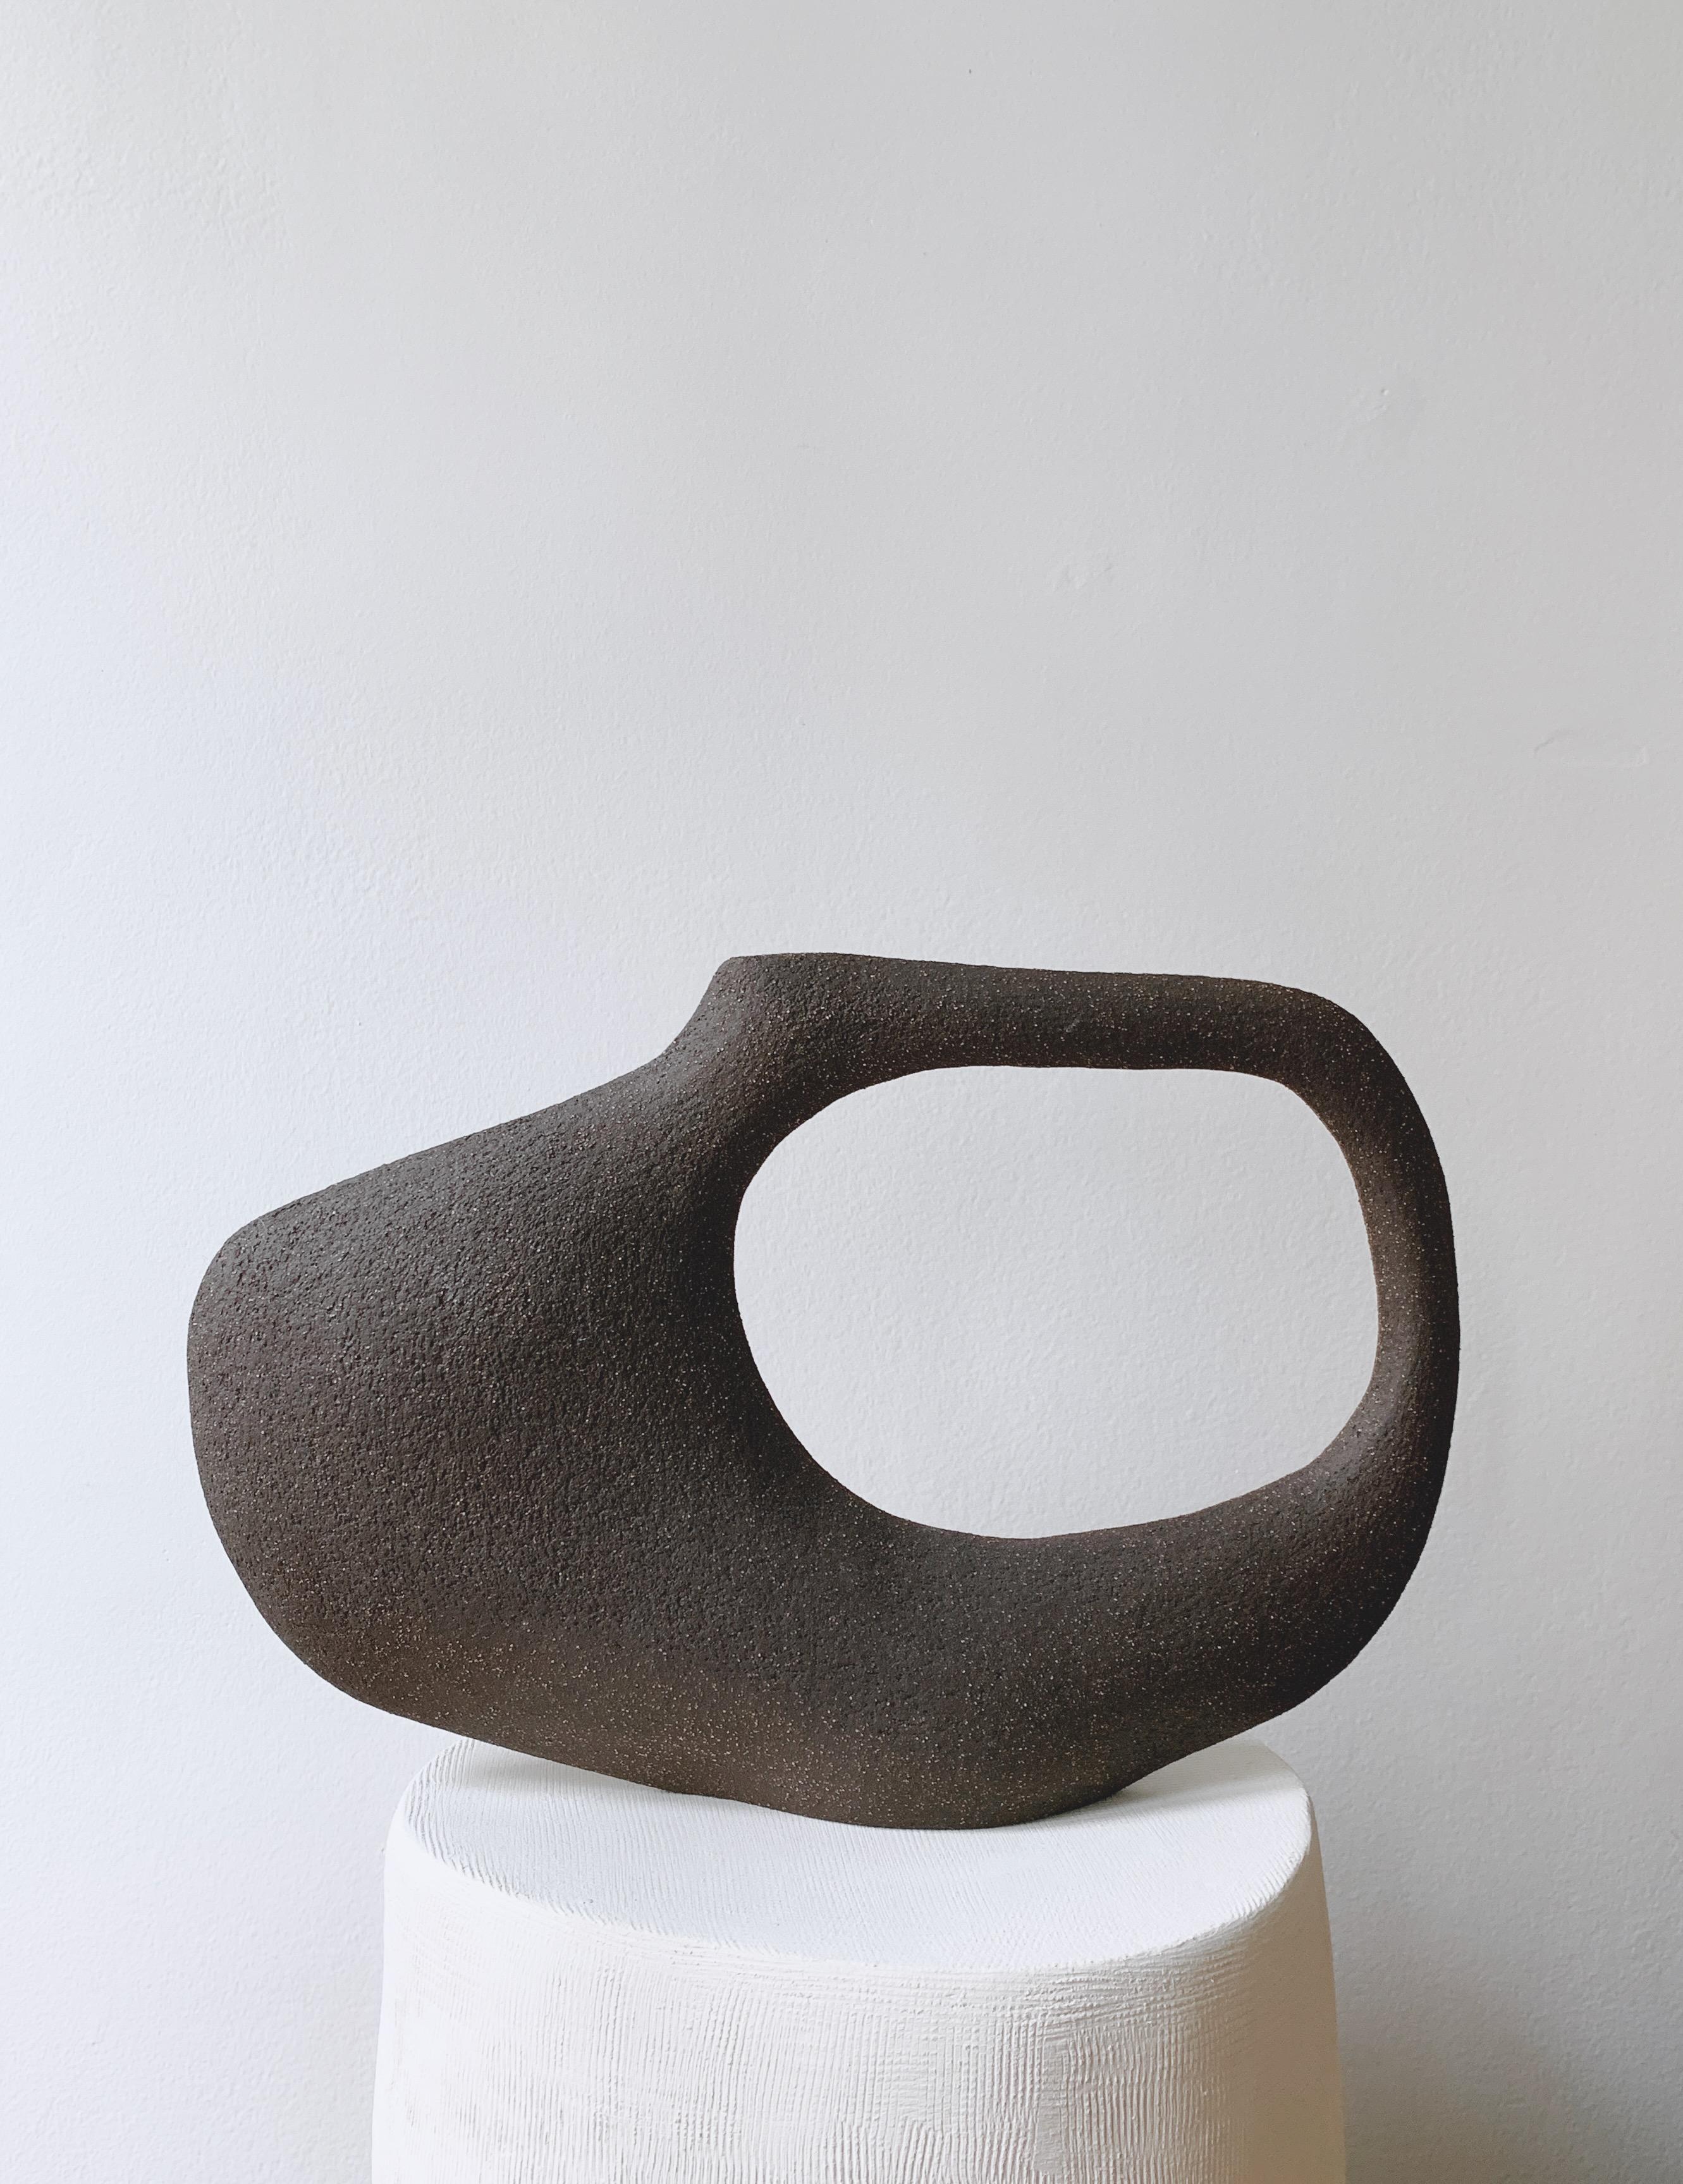 Jon Tribu 5.23 sculpture by Léontine Furcy
Unique piece.
Materials: Raw black sandstone.
Dimensions: L 34 x H 23 cm.

Léontine Furcy, ceramic artist, tells about herself in shapes, textures, curves, asymmetries, purifications. Each of the